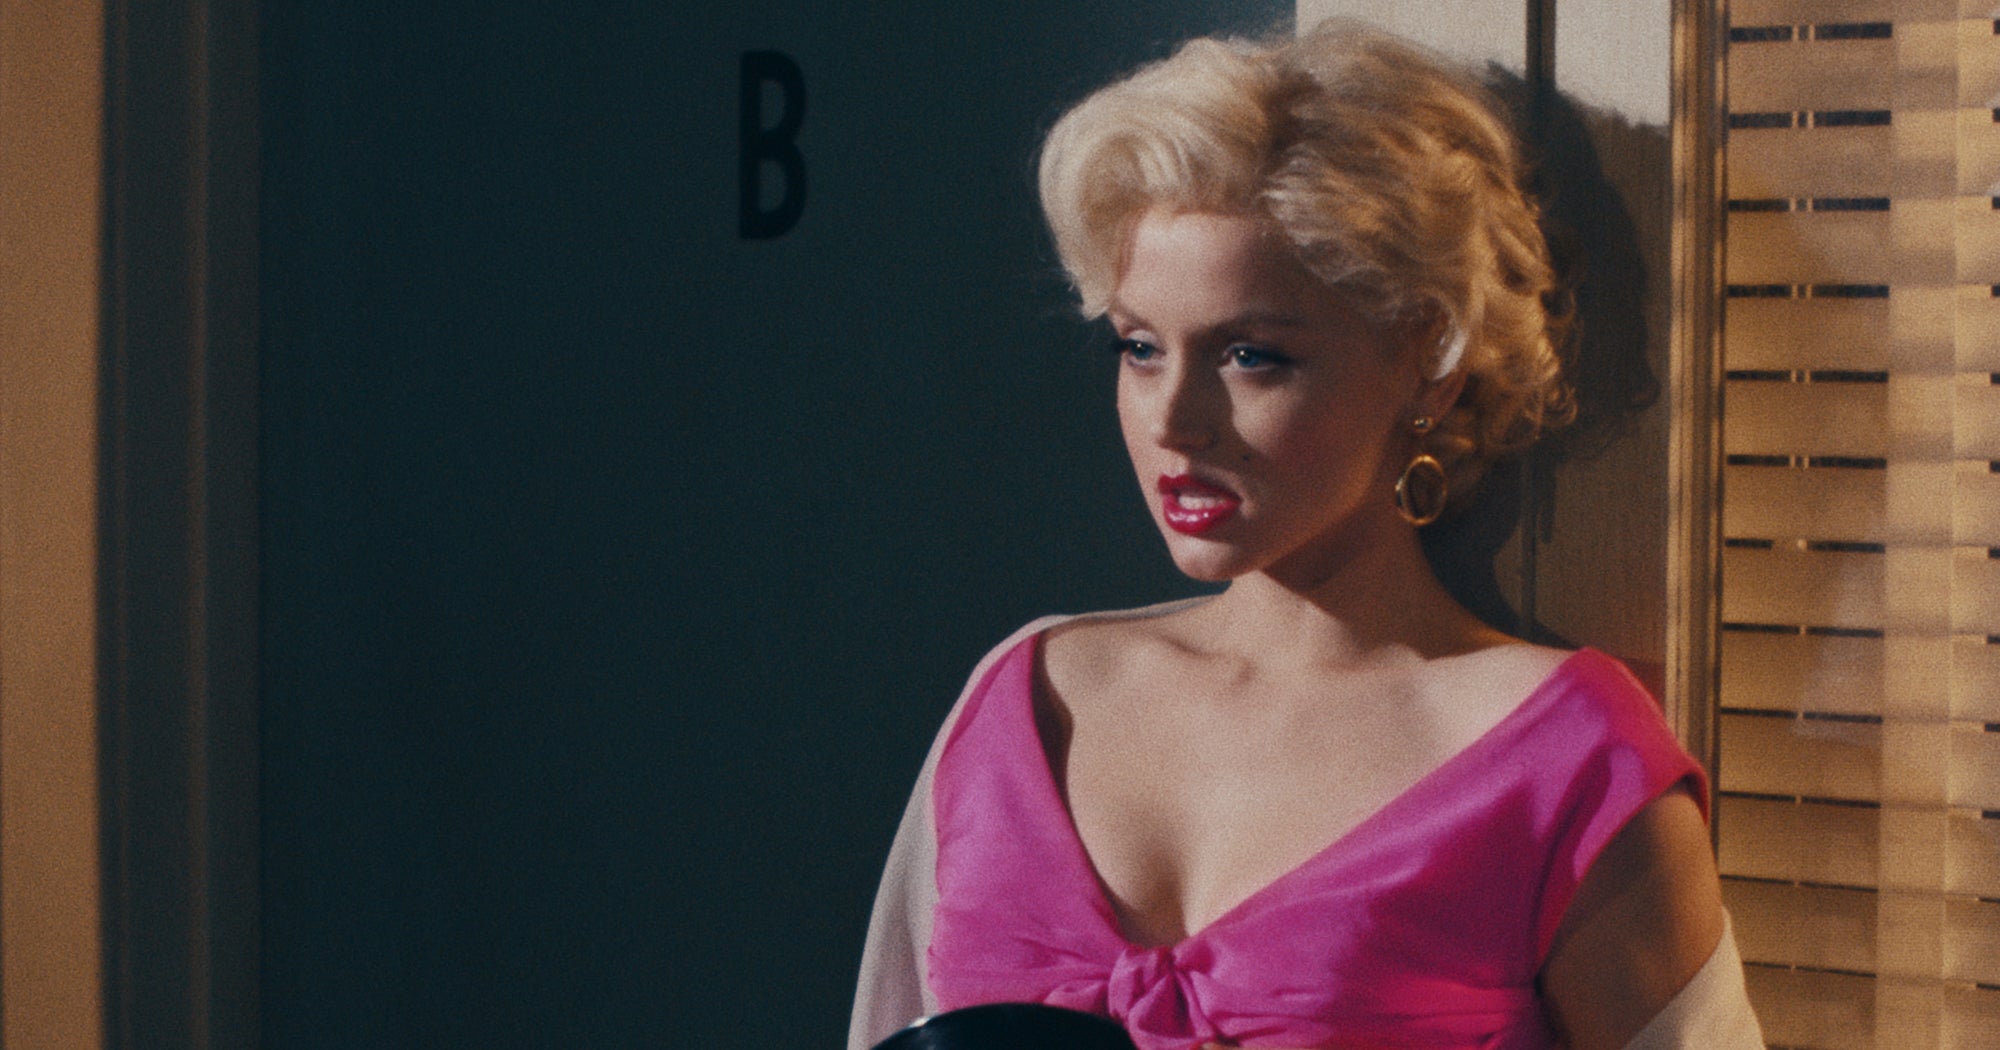 Blond: Lasst Marilyn Monroe bitte einfach in Frieden ruhen